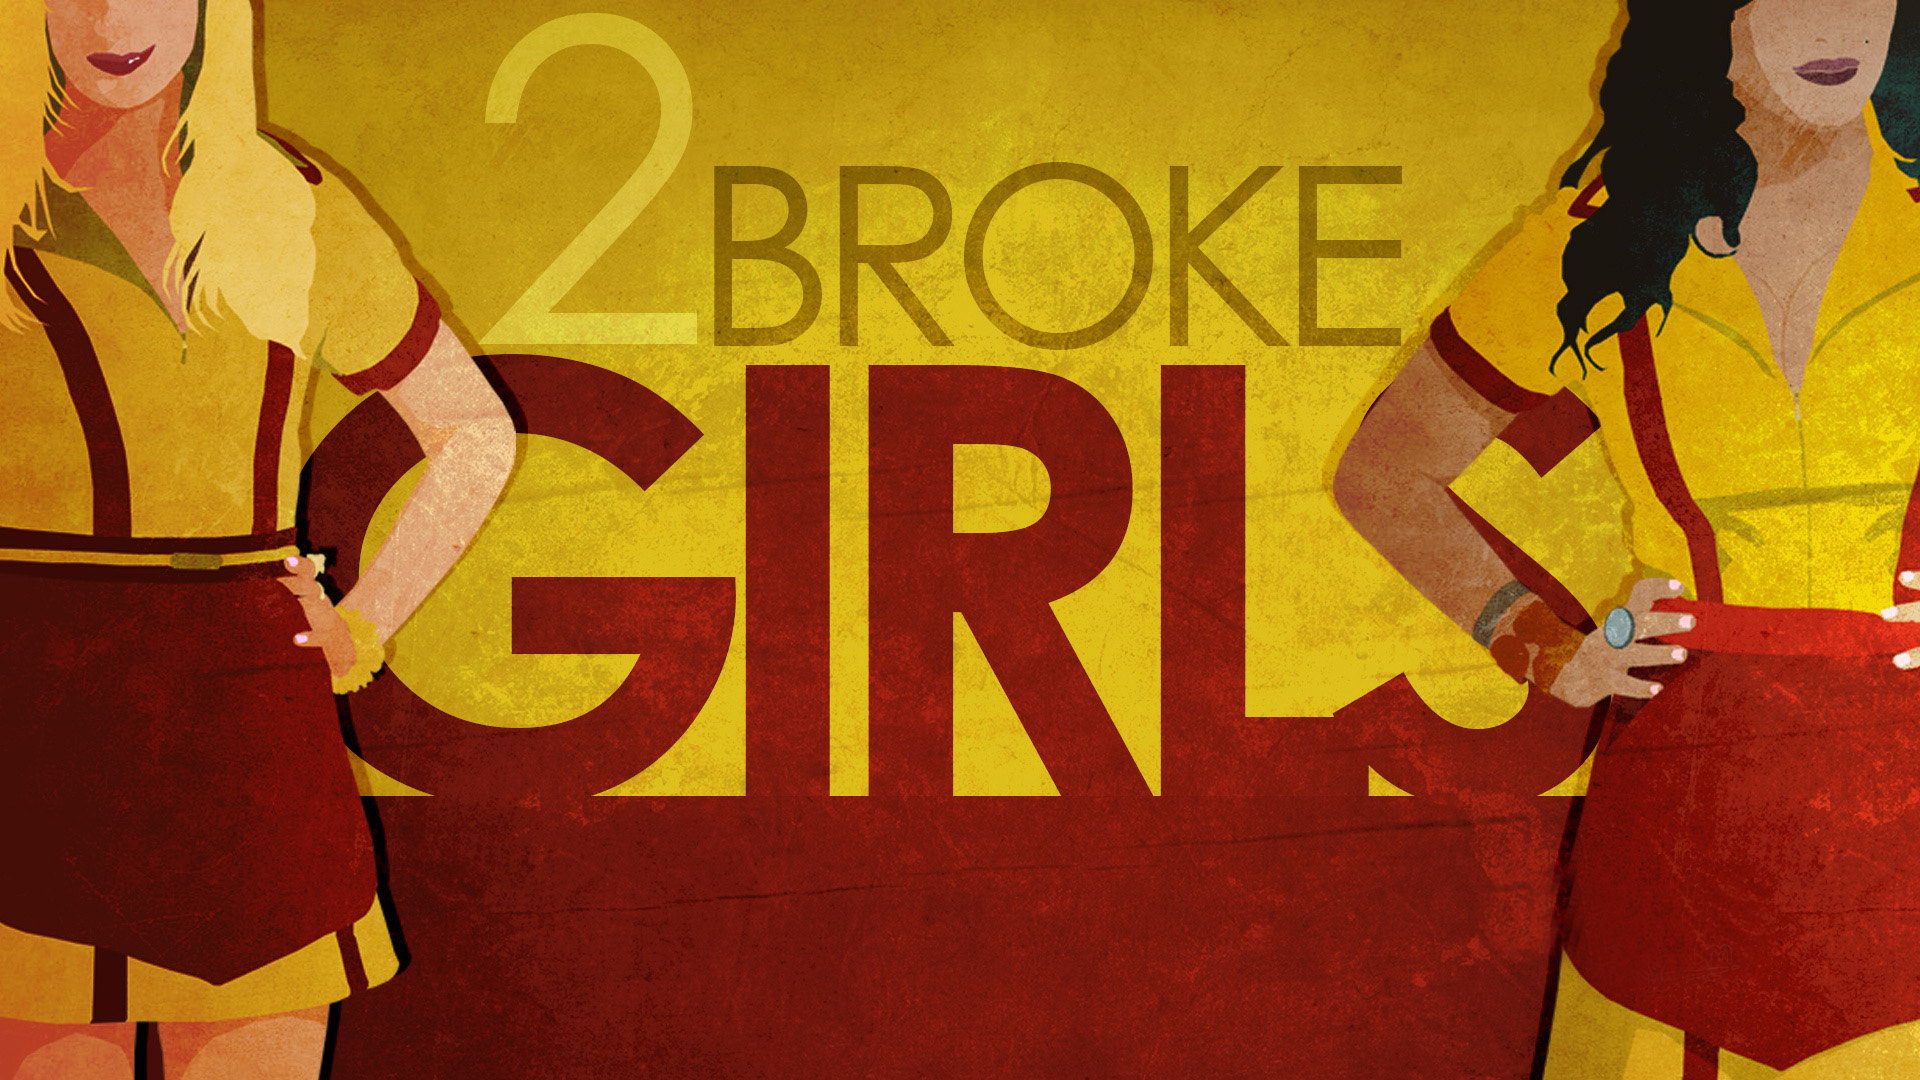 2 Broke Girls wallpaper 6